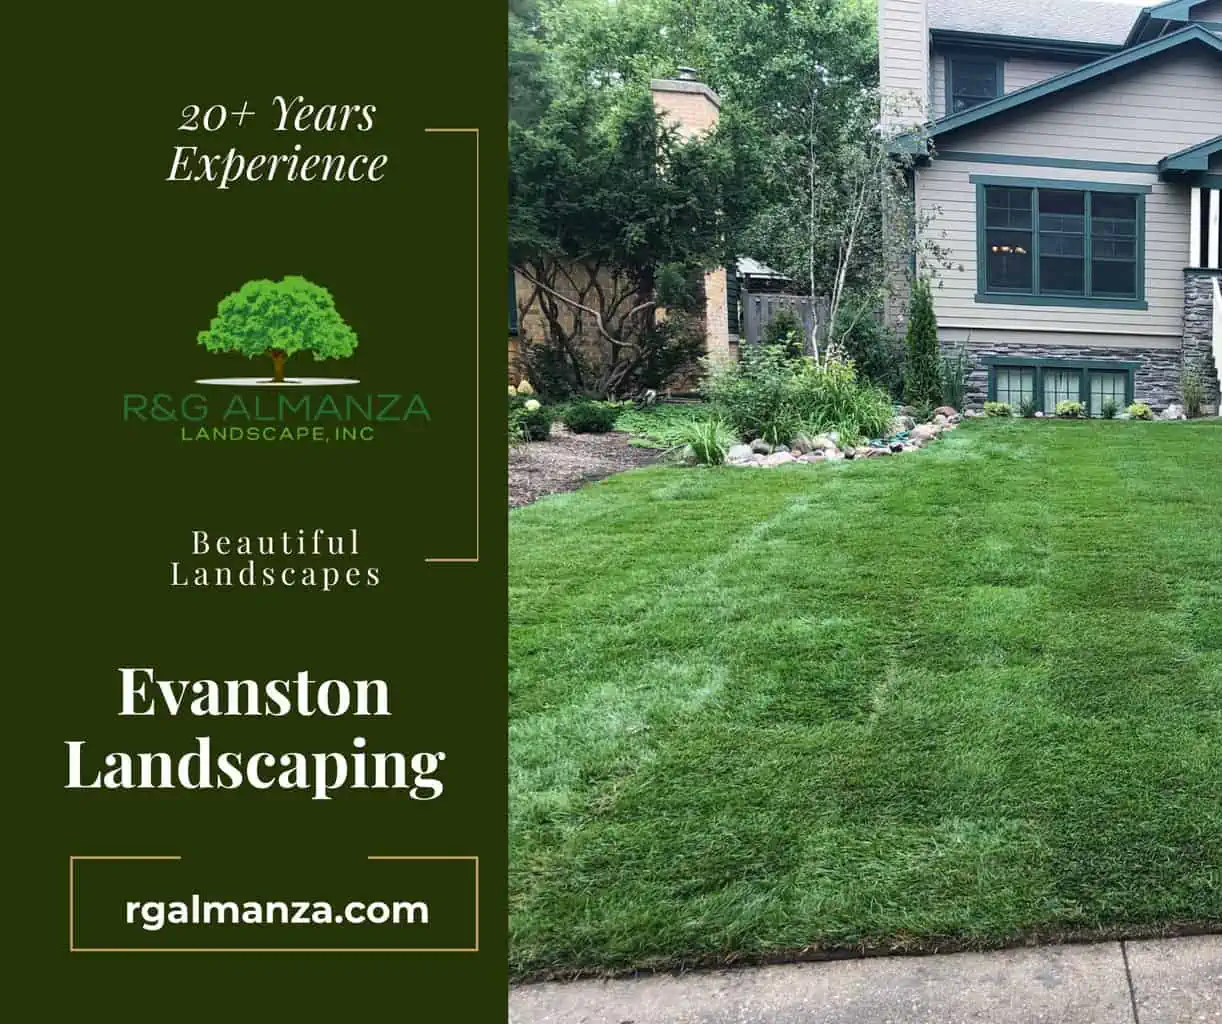 evanston landscaping